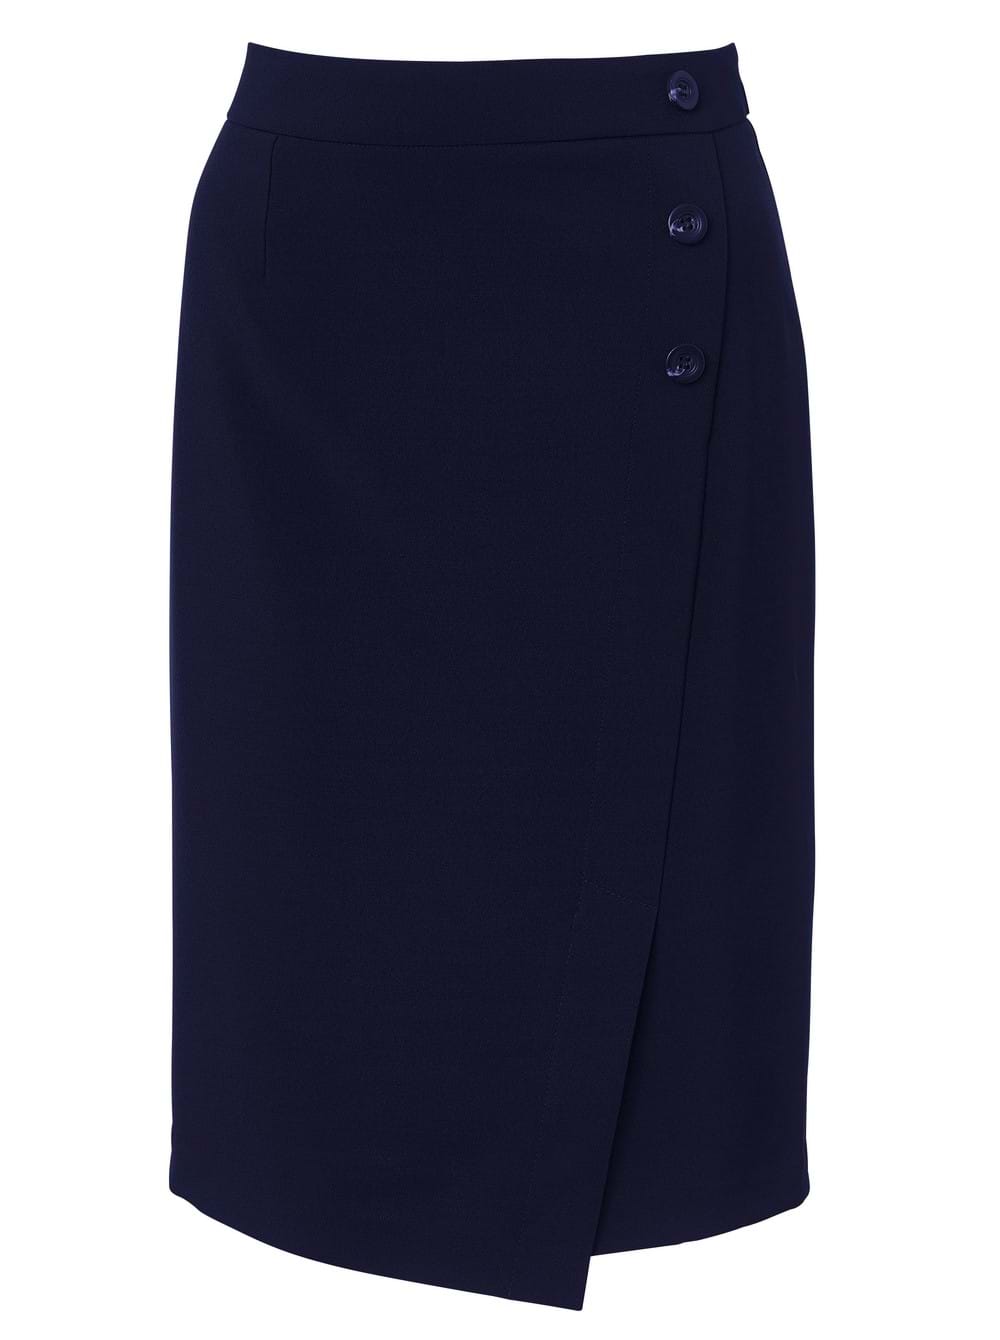 Ladies Freya Pencil Skirt - Fabric 869 Navy / 50 - Knee-Length Skirts